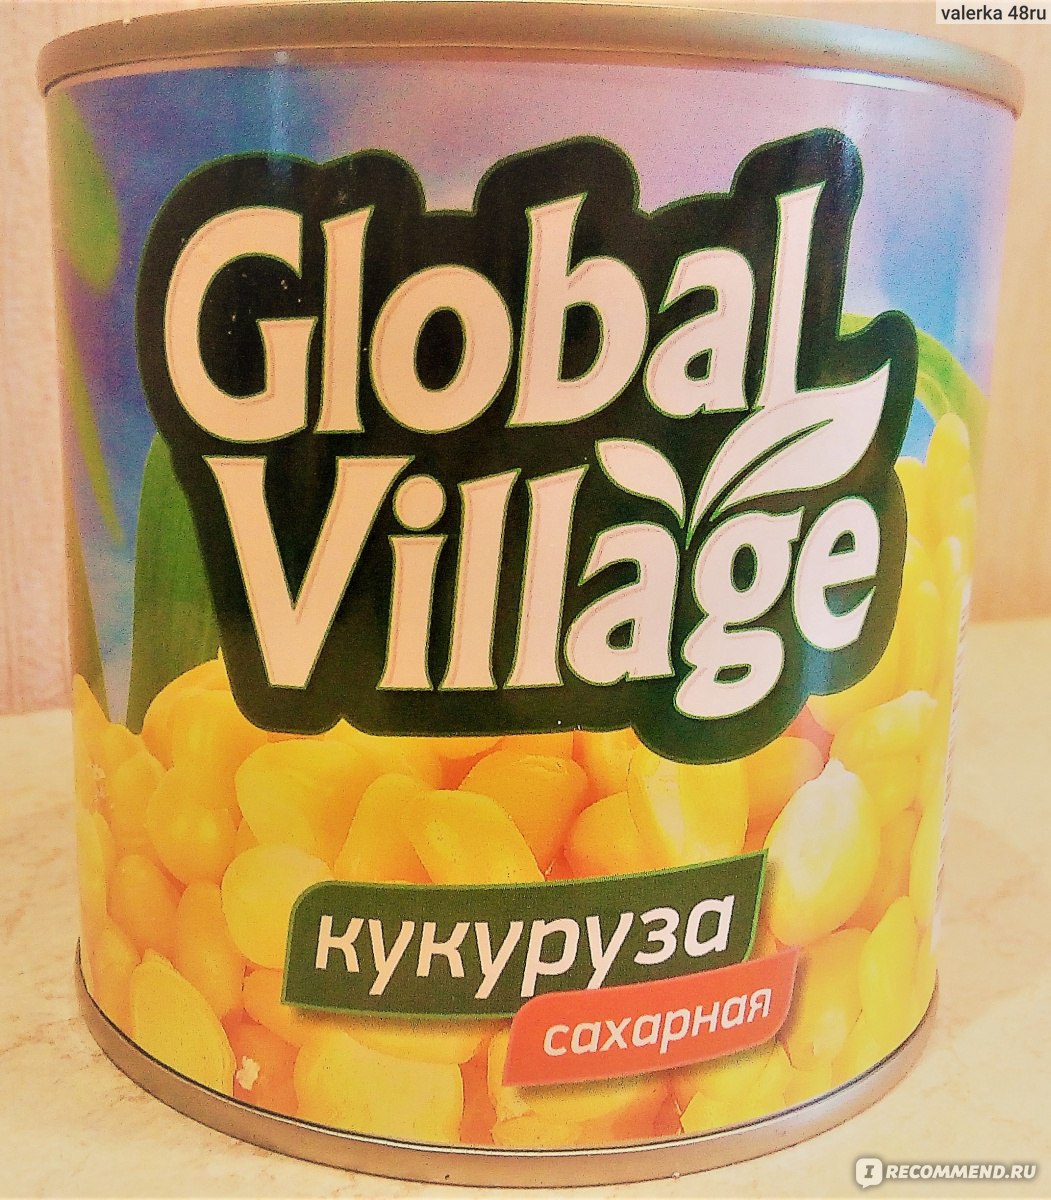 Global village овощи. Global Village консервы овощные. Консервы Глобал Виладж. Кукуруза консервированная Глобал Виладж. Глобал Вилладж консервы овощные.